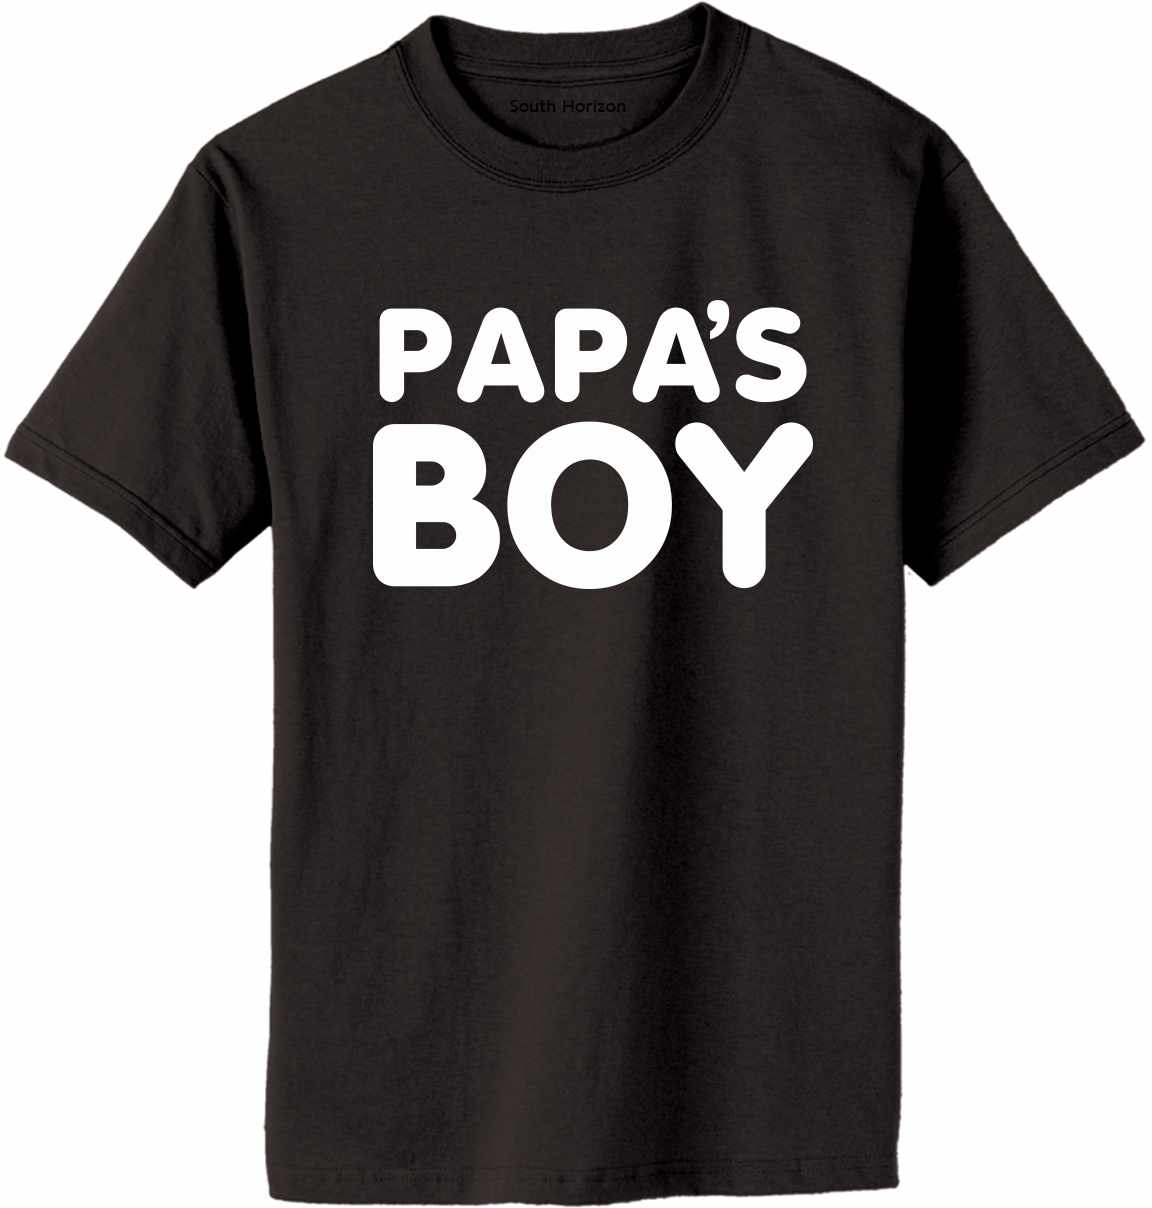 Papa's Boy on Adult T-Shirt